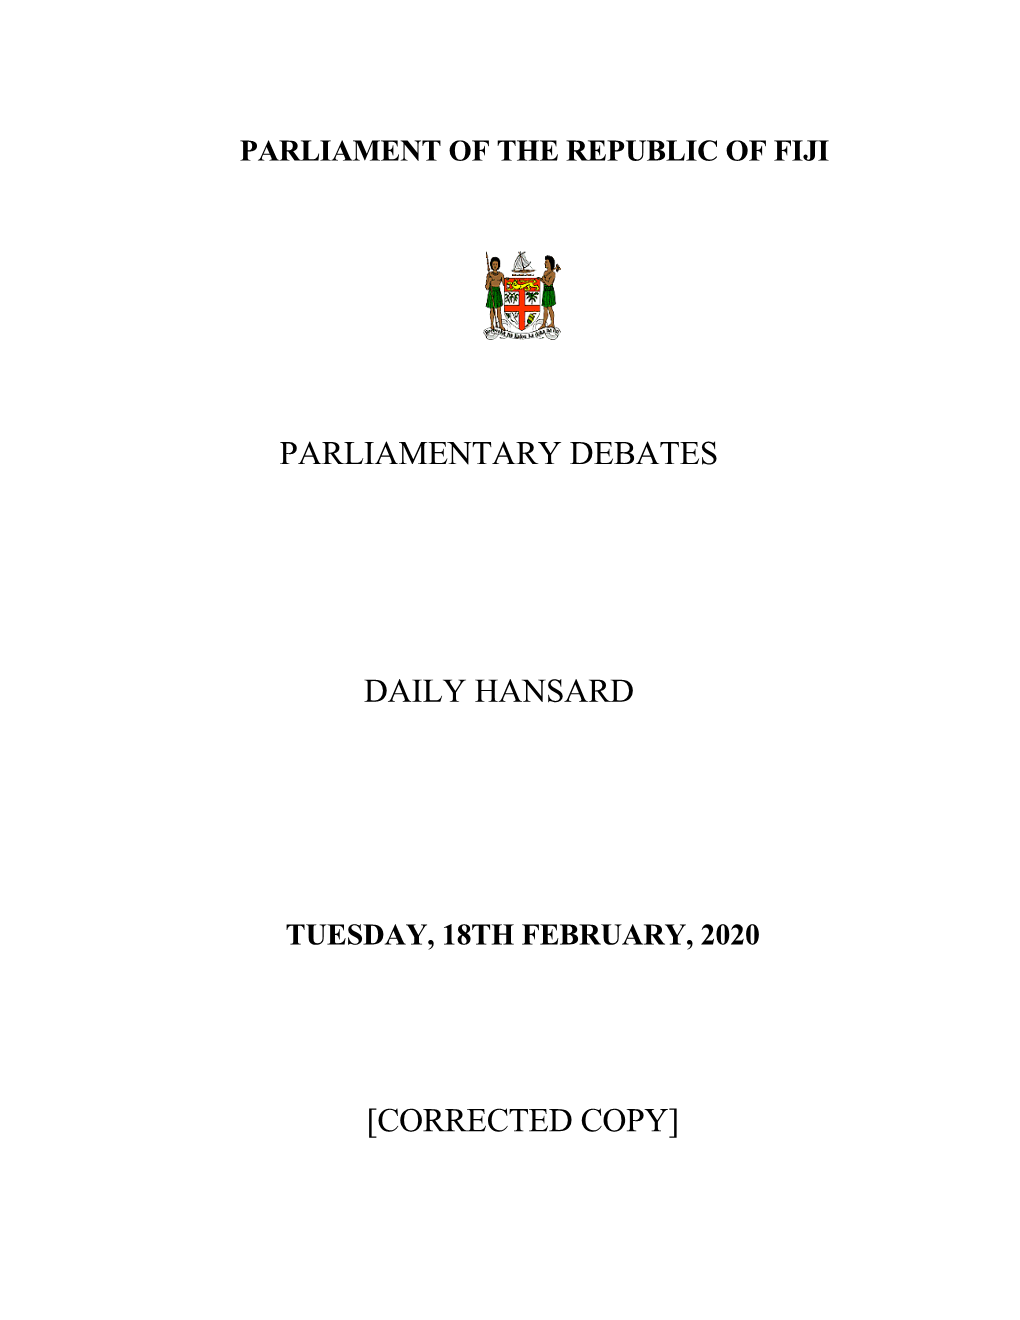 Parliamentary Debates Daily Hansard [Corrected Copy]